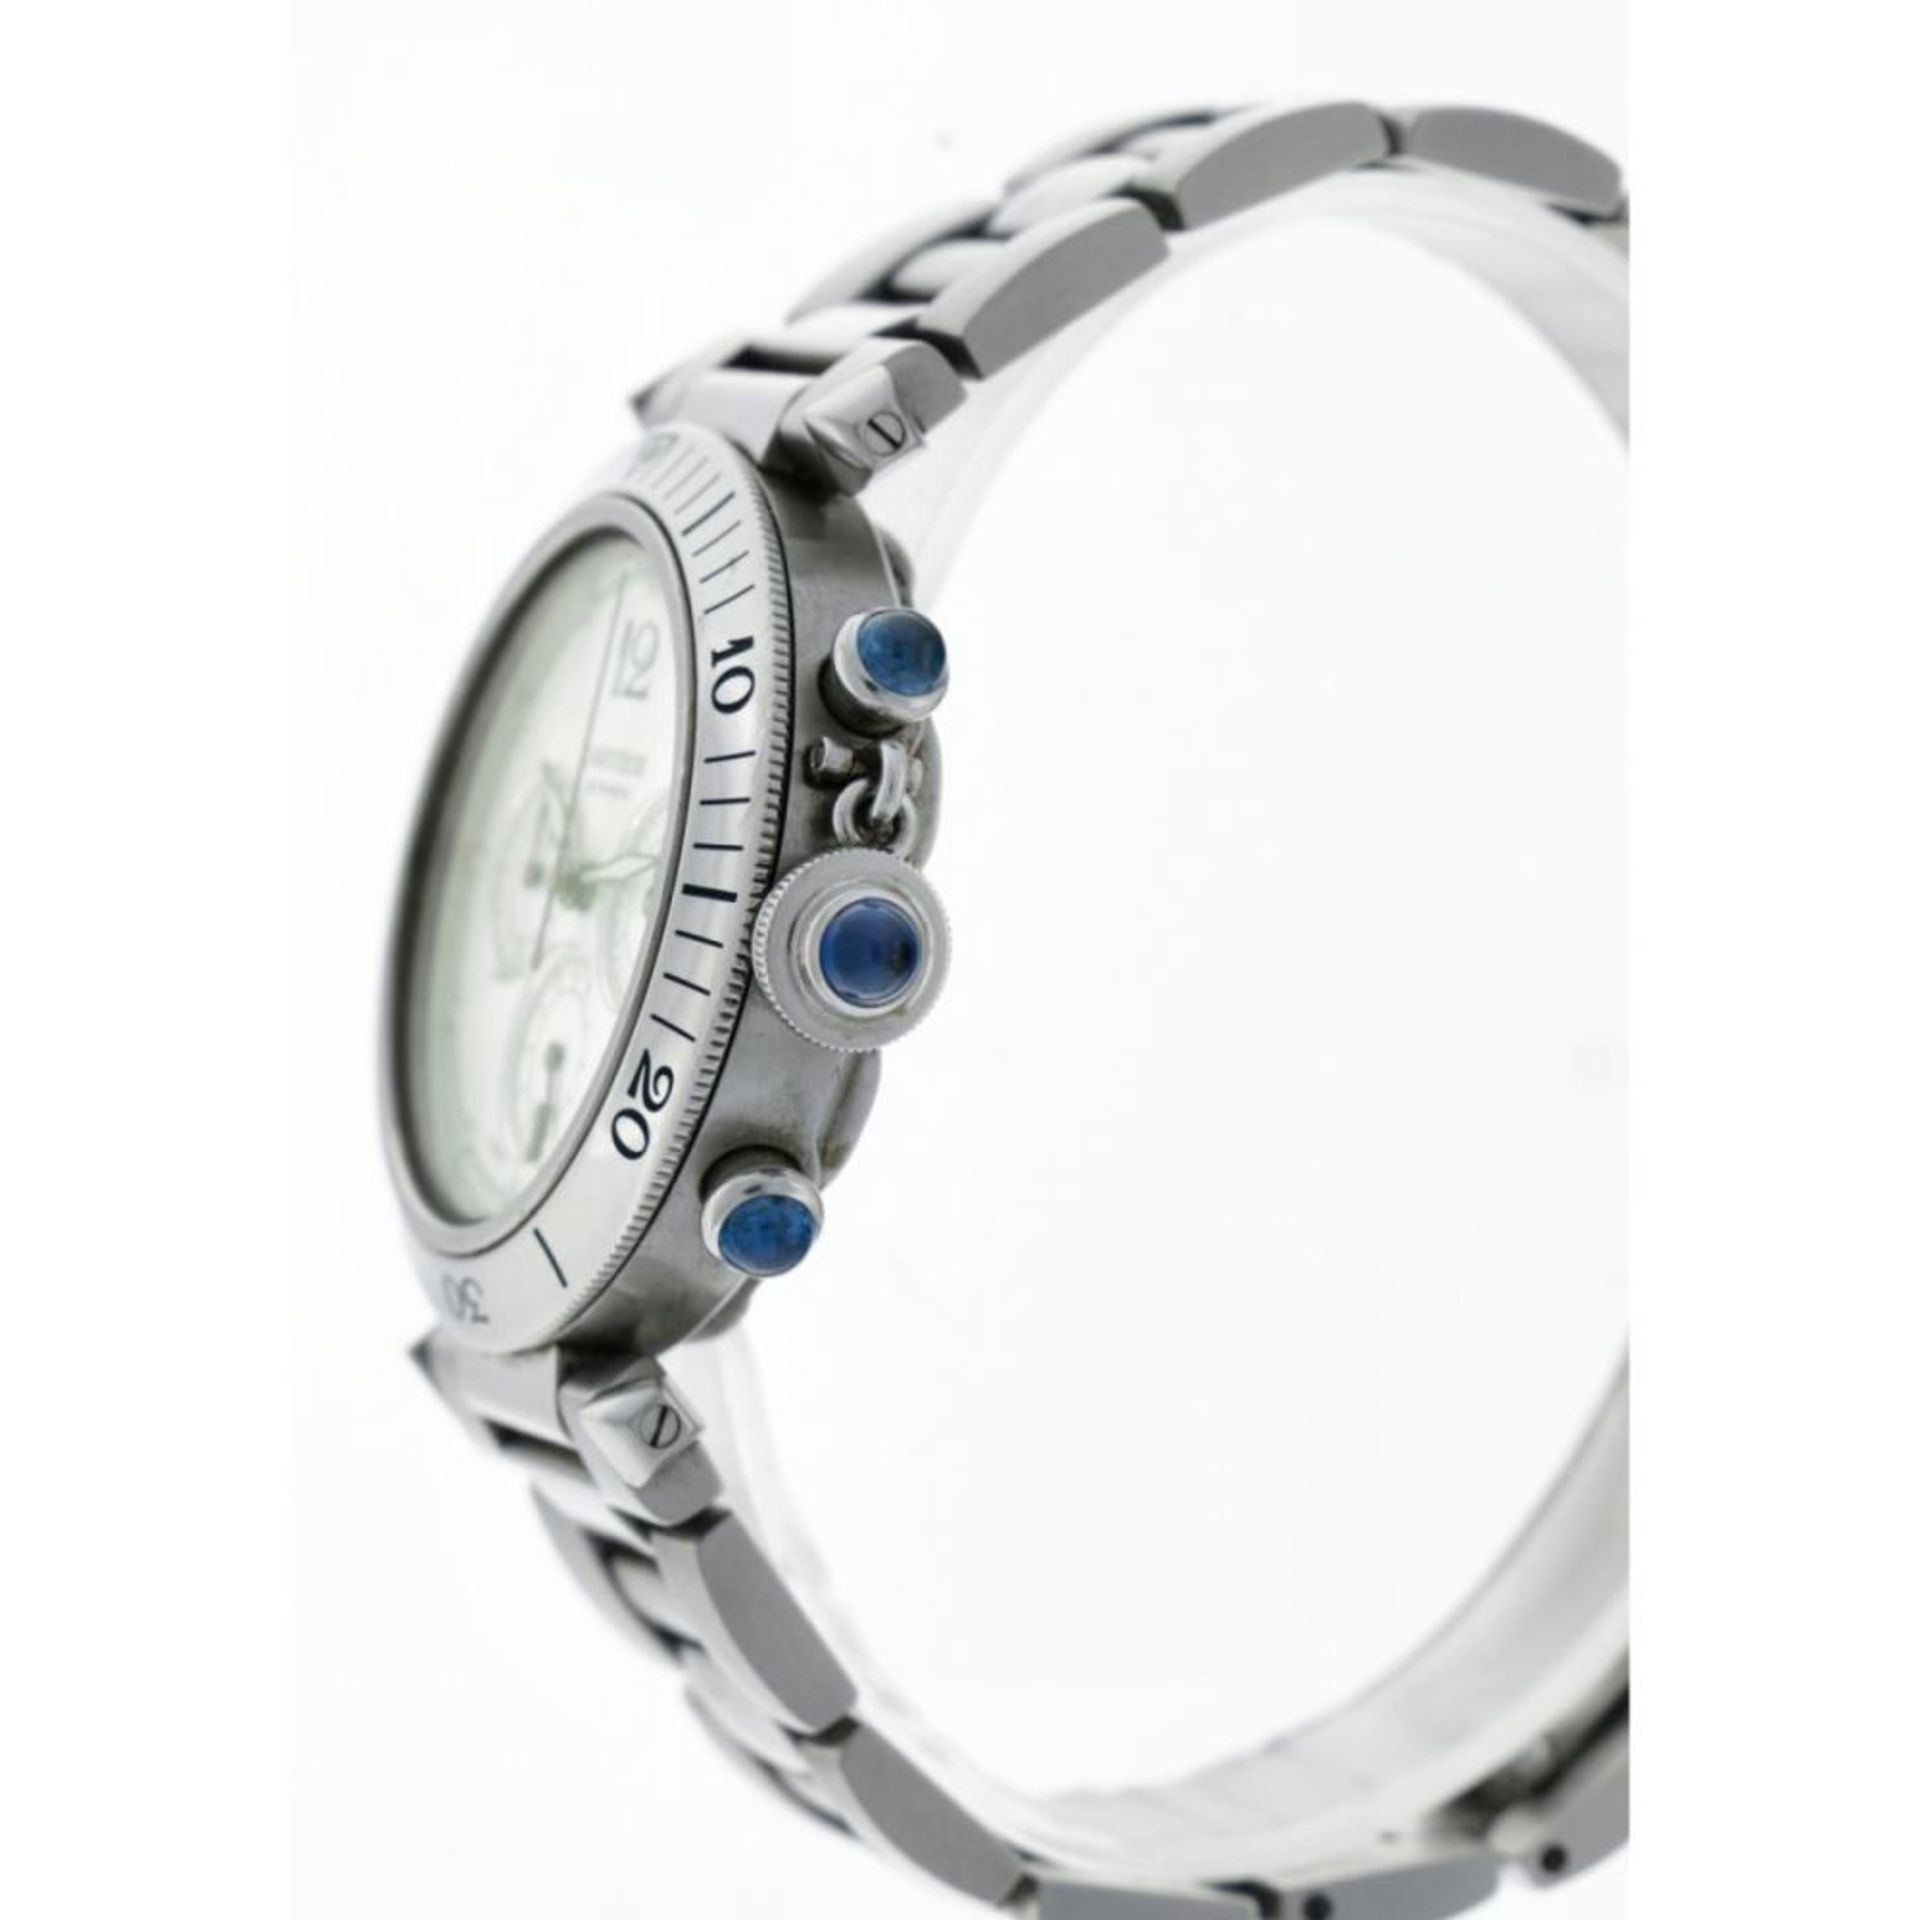 Cartier Pasha 2113 - Men's watch - approx. 2010. - Image 10 of 12